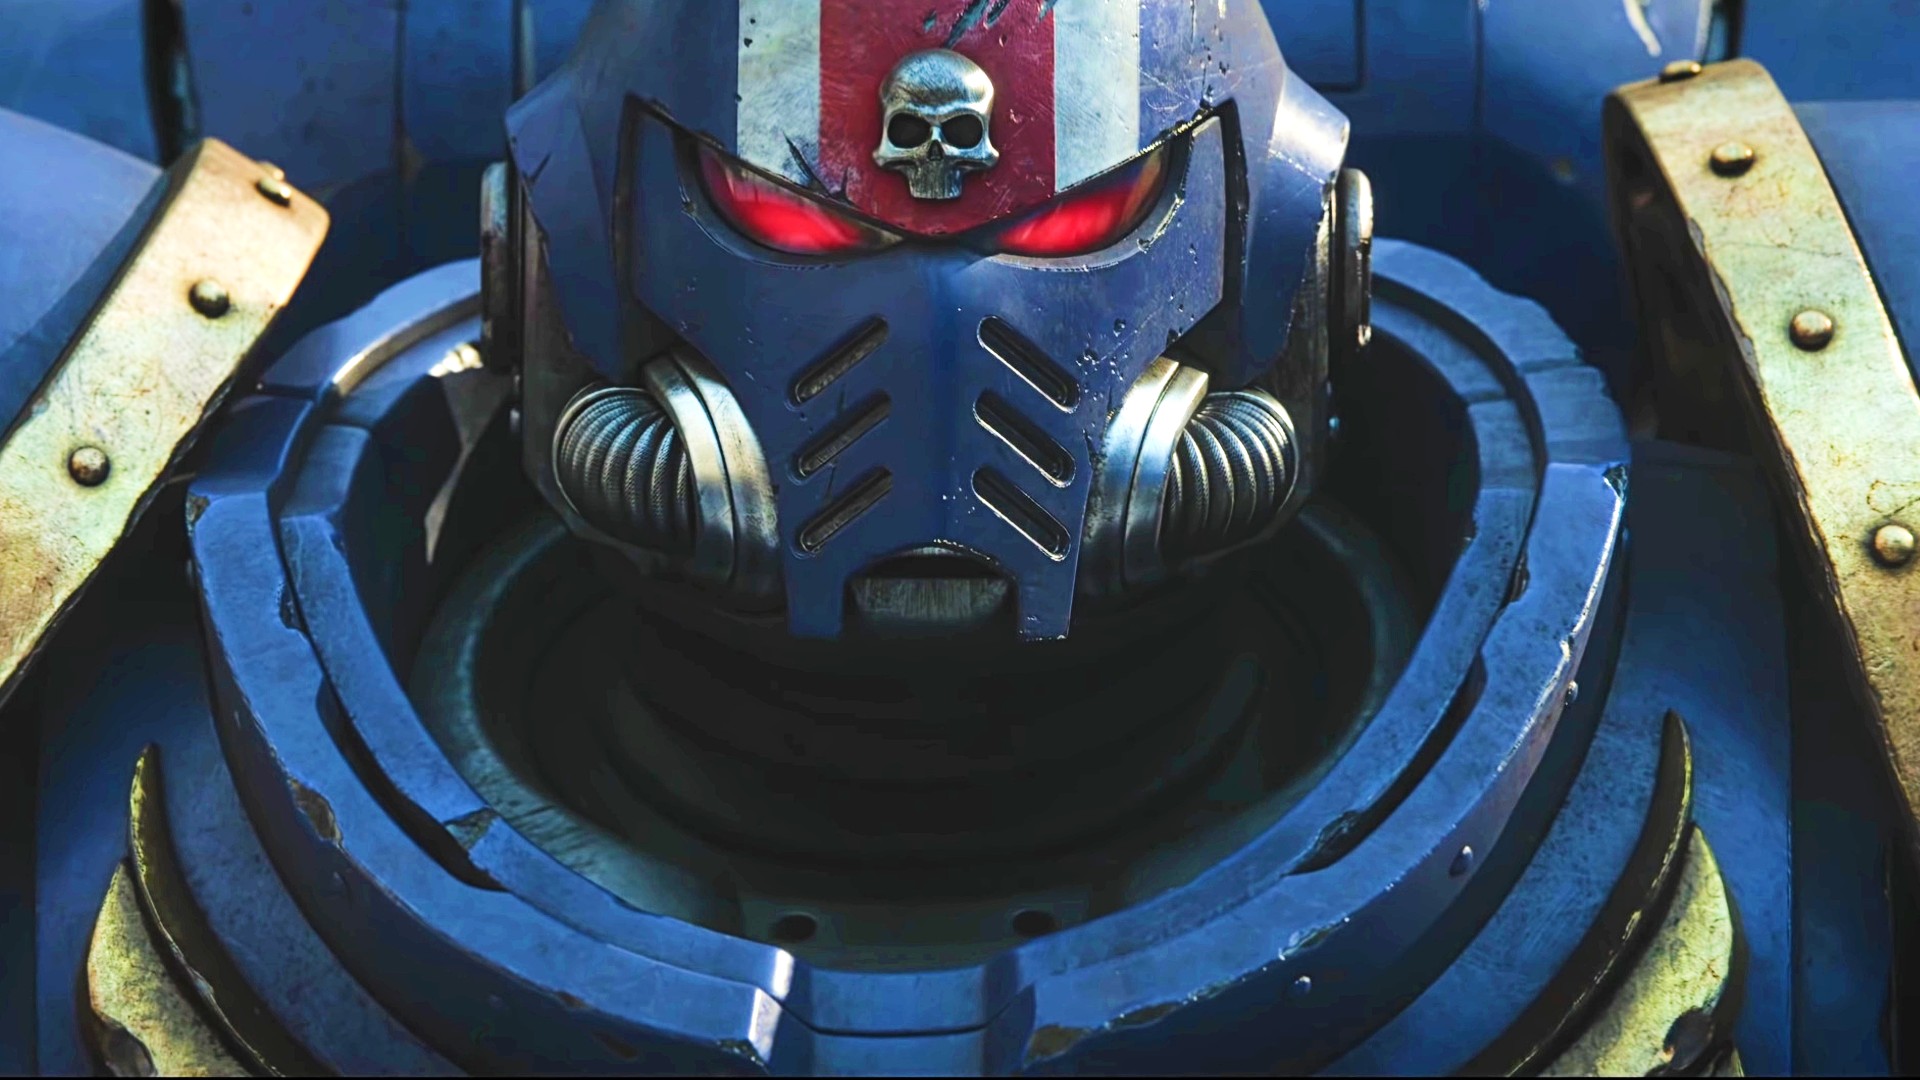 Warhammer Skulls will reveal new Space Marine 2 info in June